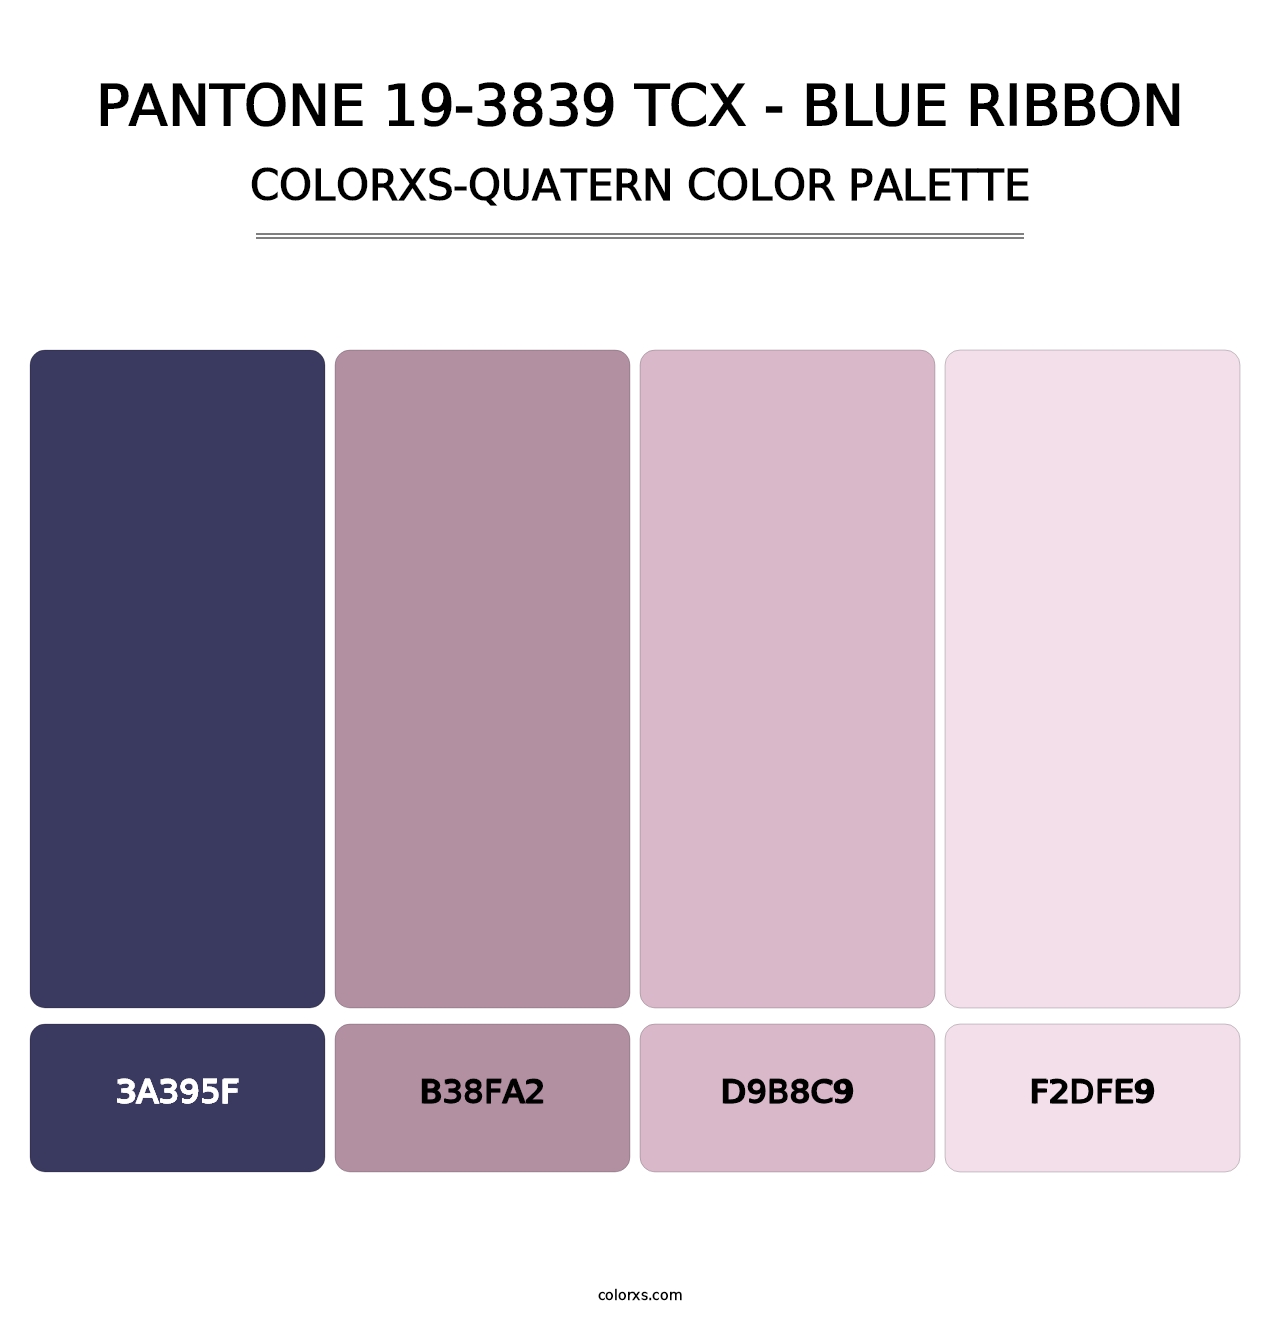 PANTONE 19-3839 TCX - Blue Ribbon - Colorxs Quatern Palette